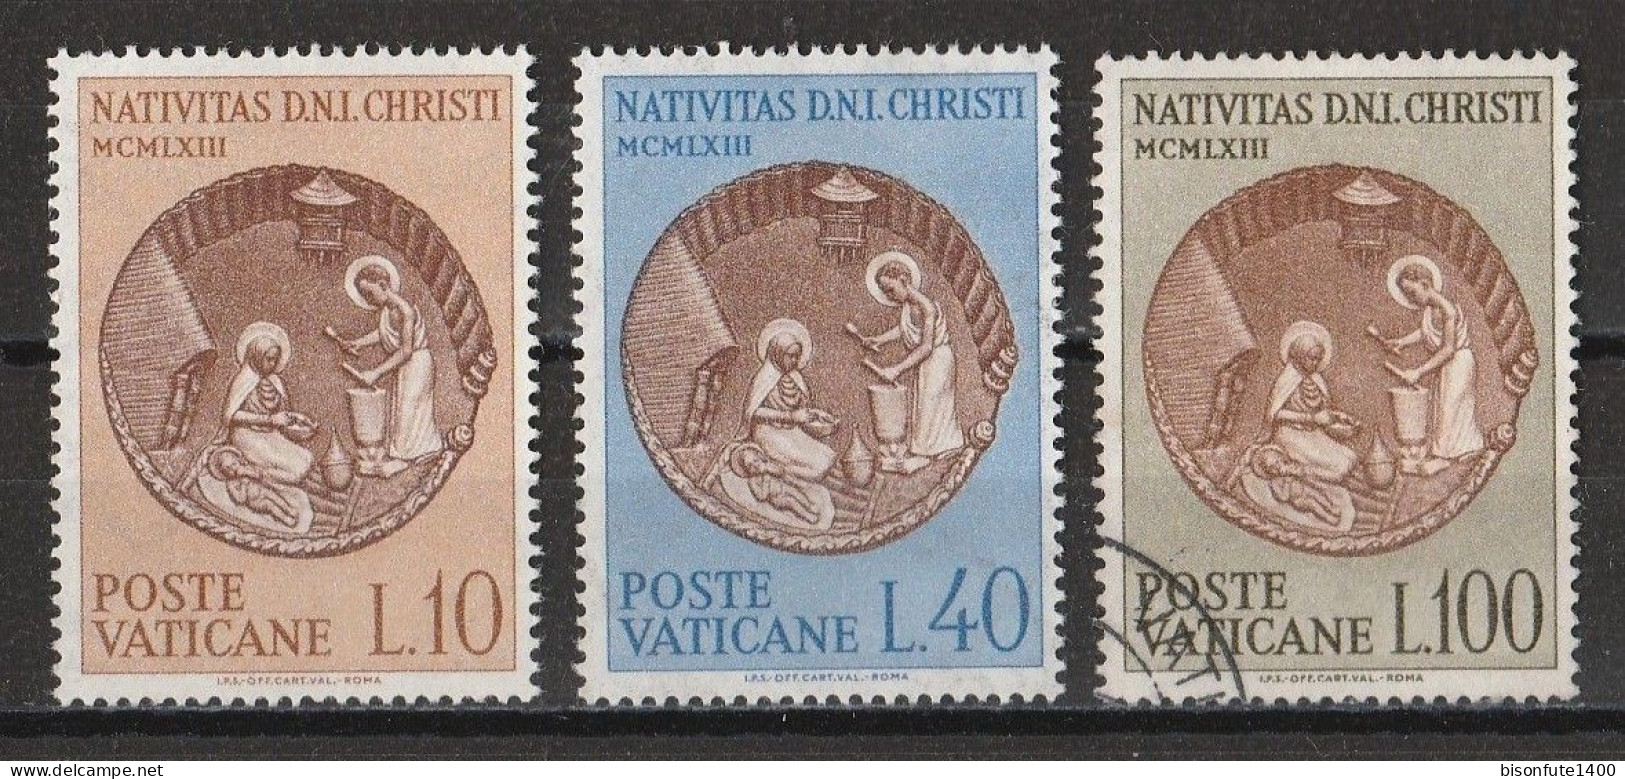 Vatican 1963 : Timbres Yvert & Tellier N° 374 - 375 - 376 - 380 - 381 - 382 - 383 - 384 - 385 - 386 - 387 - 388 -....... - Gebruikt